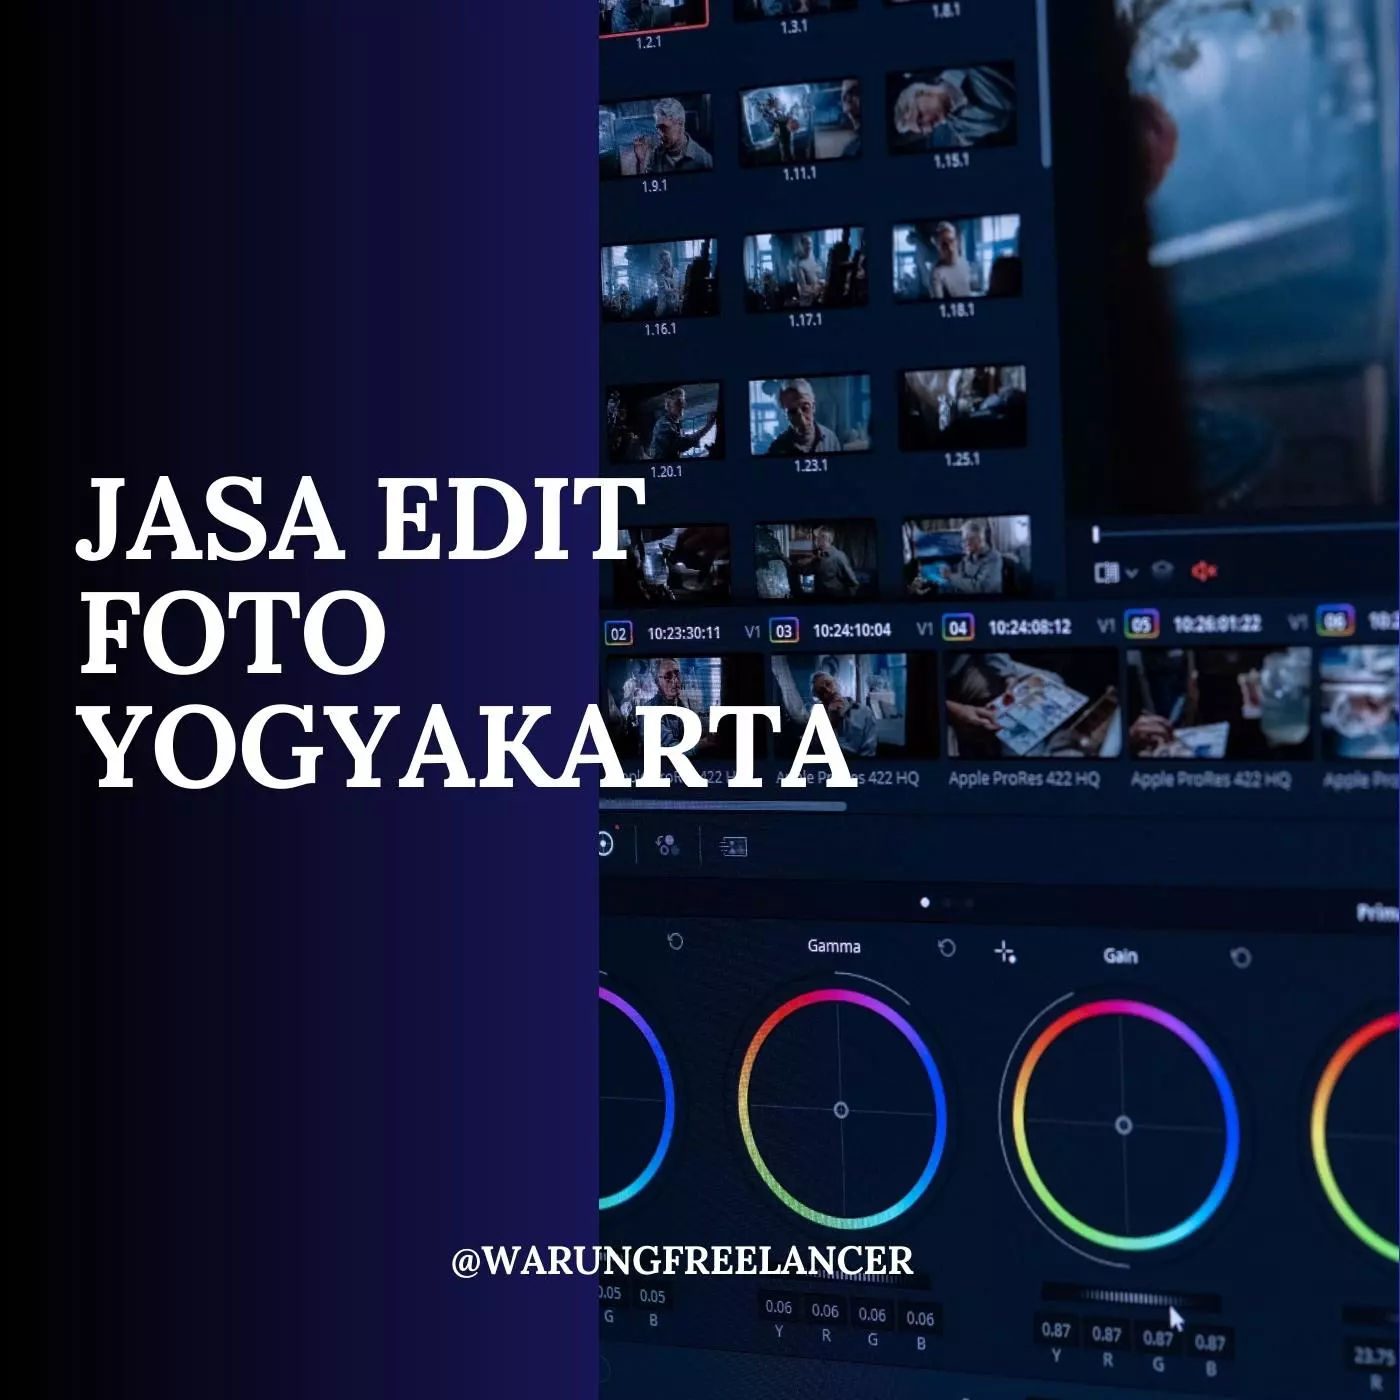 Yogyakarta Photo Editing Services